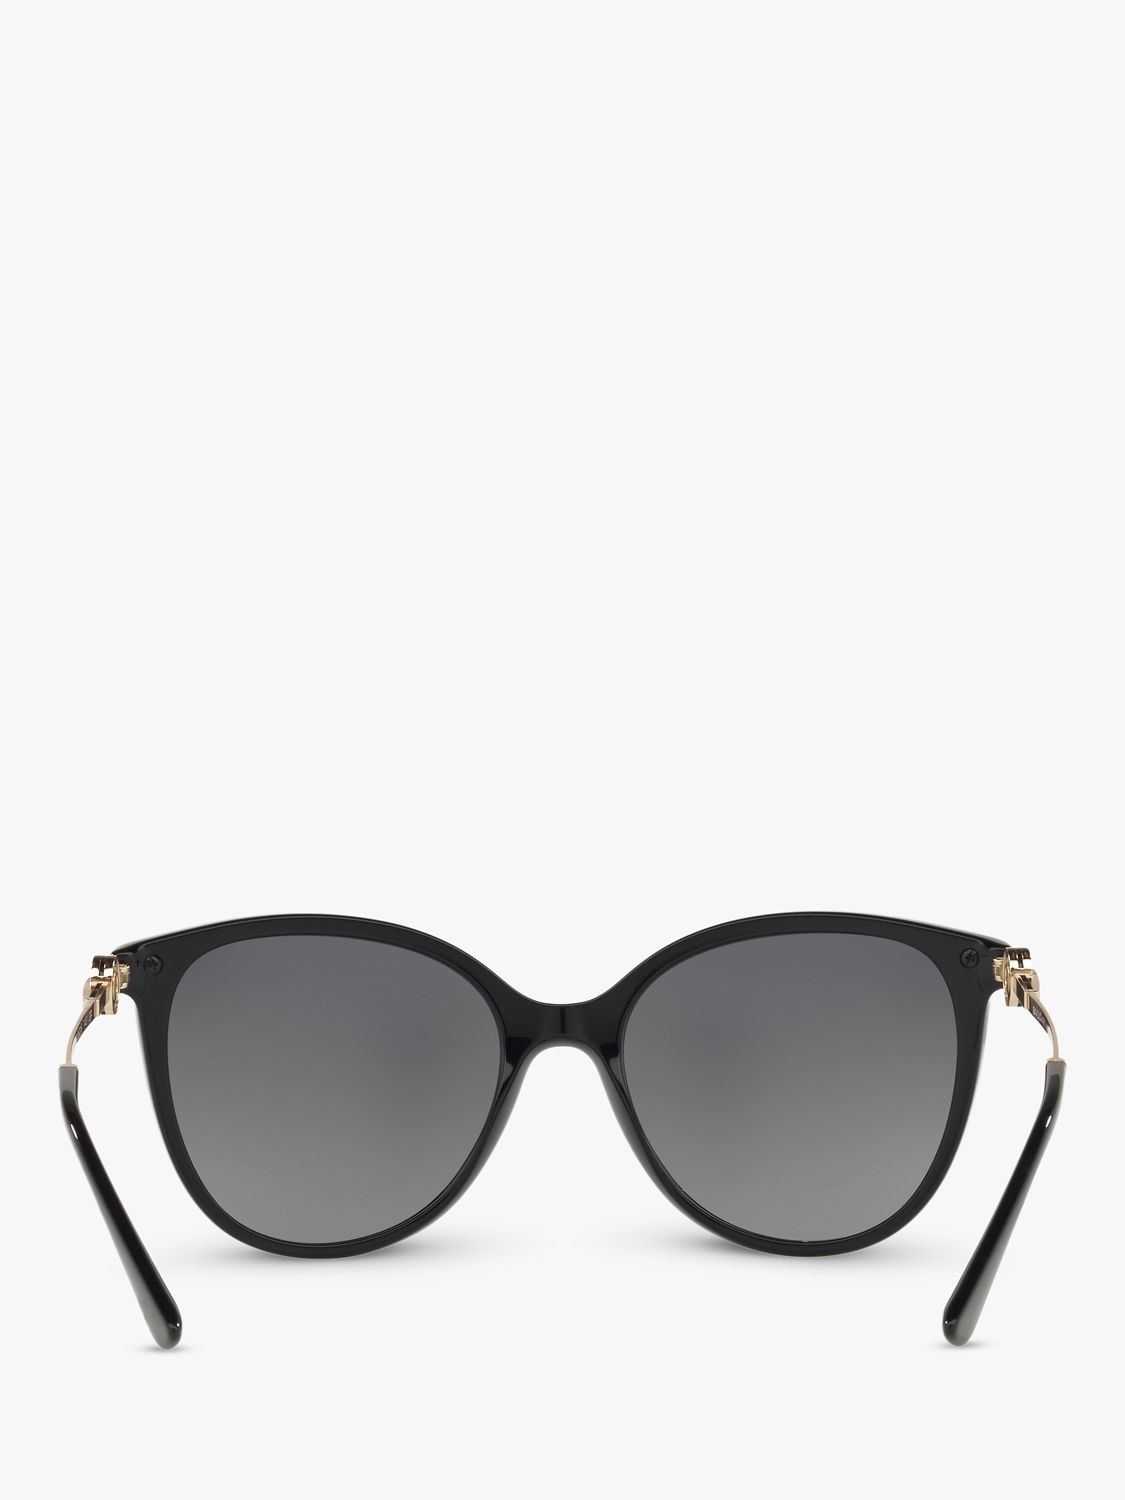 BVLGARI BV8201B55 Women's Round Sunglasses, Black at John Lewis & Partners